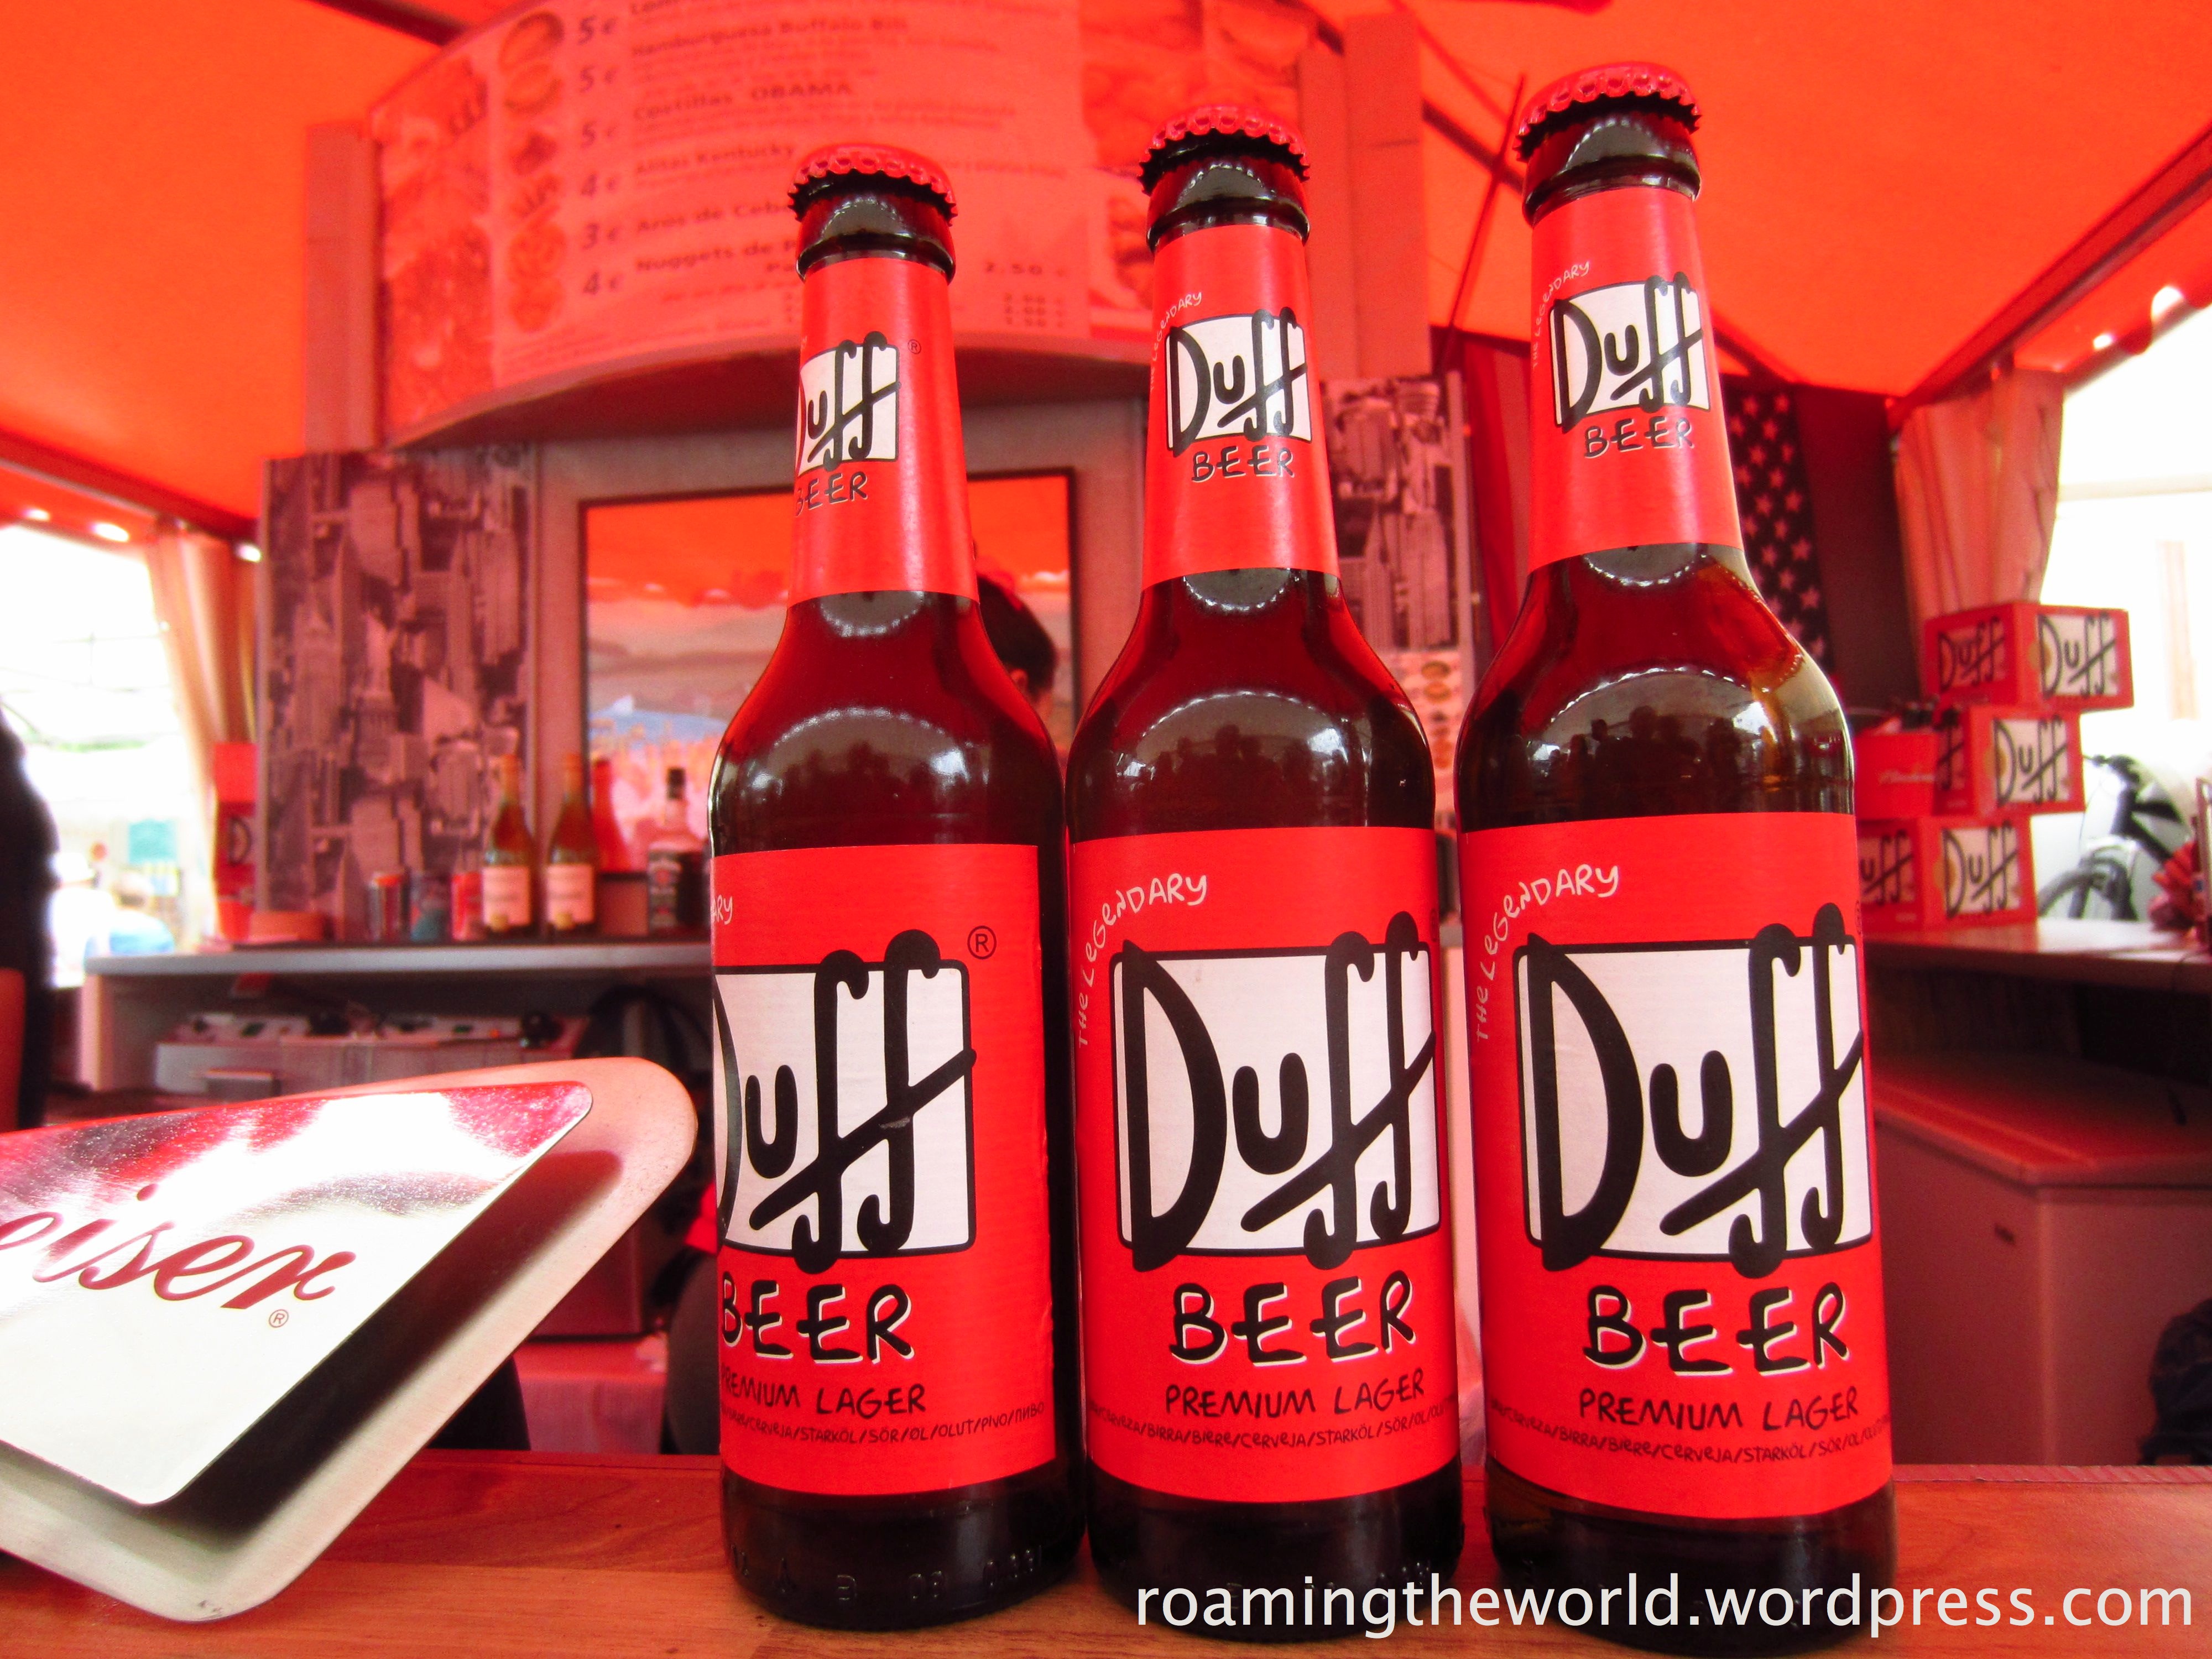 Favorite Duff Beer Label